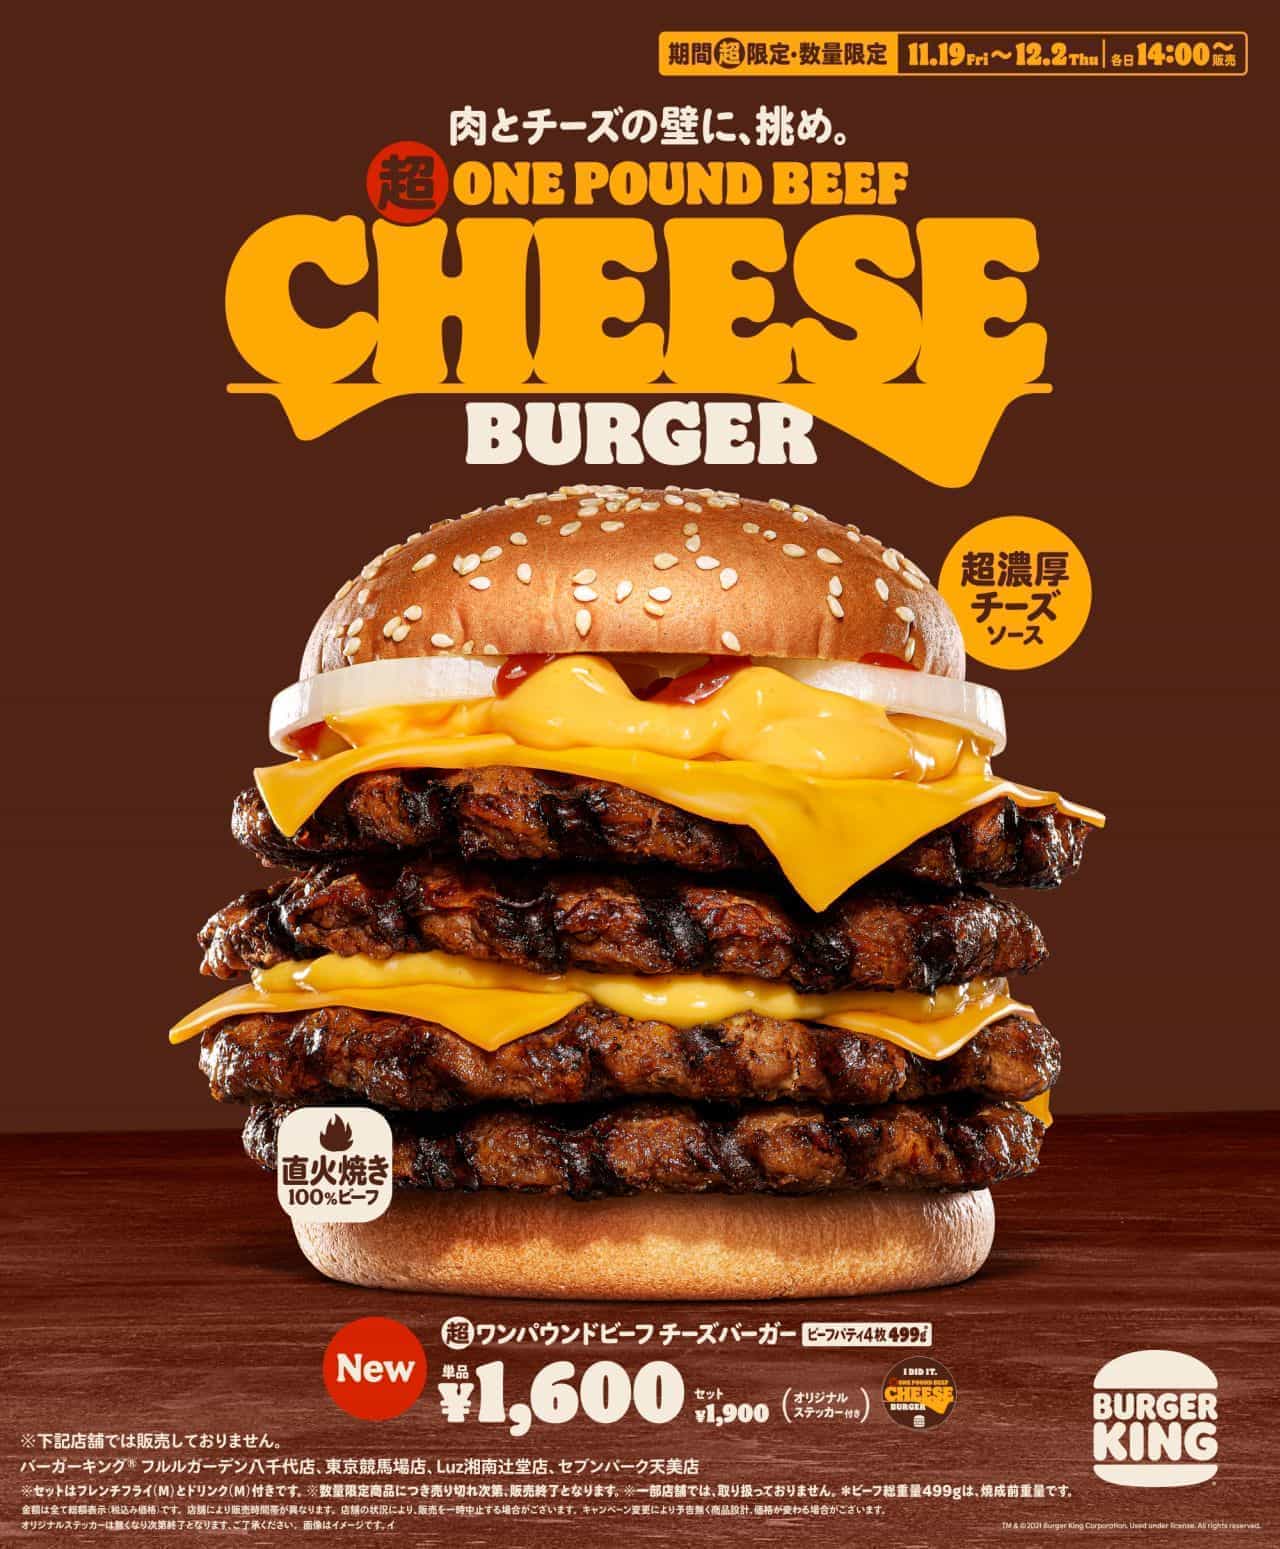 Burger King "Super One Pound Beef Cheeseburger"